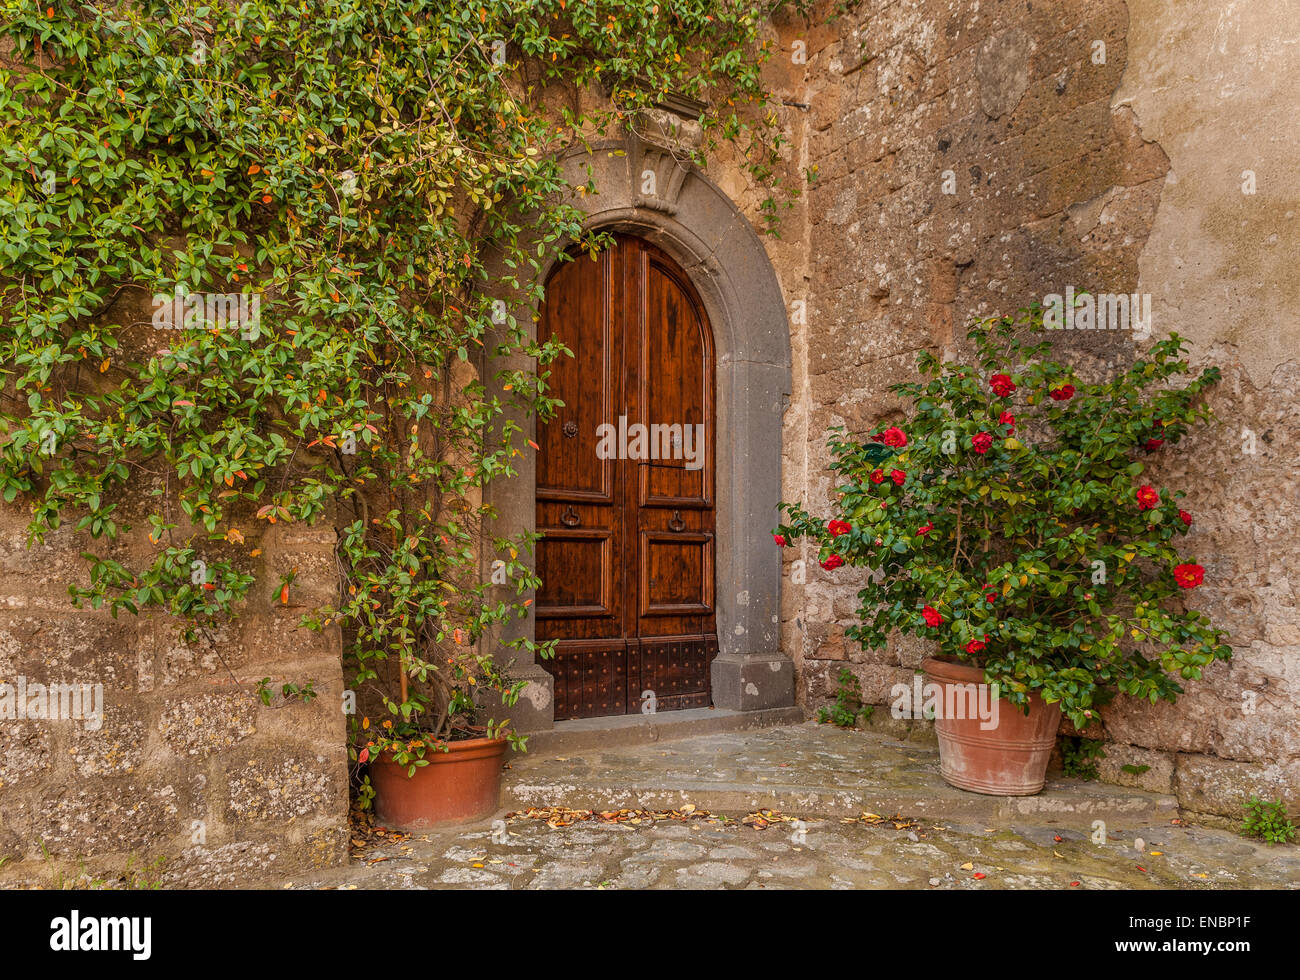 Wooden door entrance to rustic dwelling in Civita di Bagnoregio, Italy Stock Photo